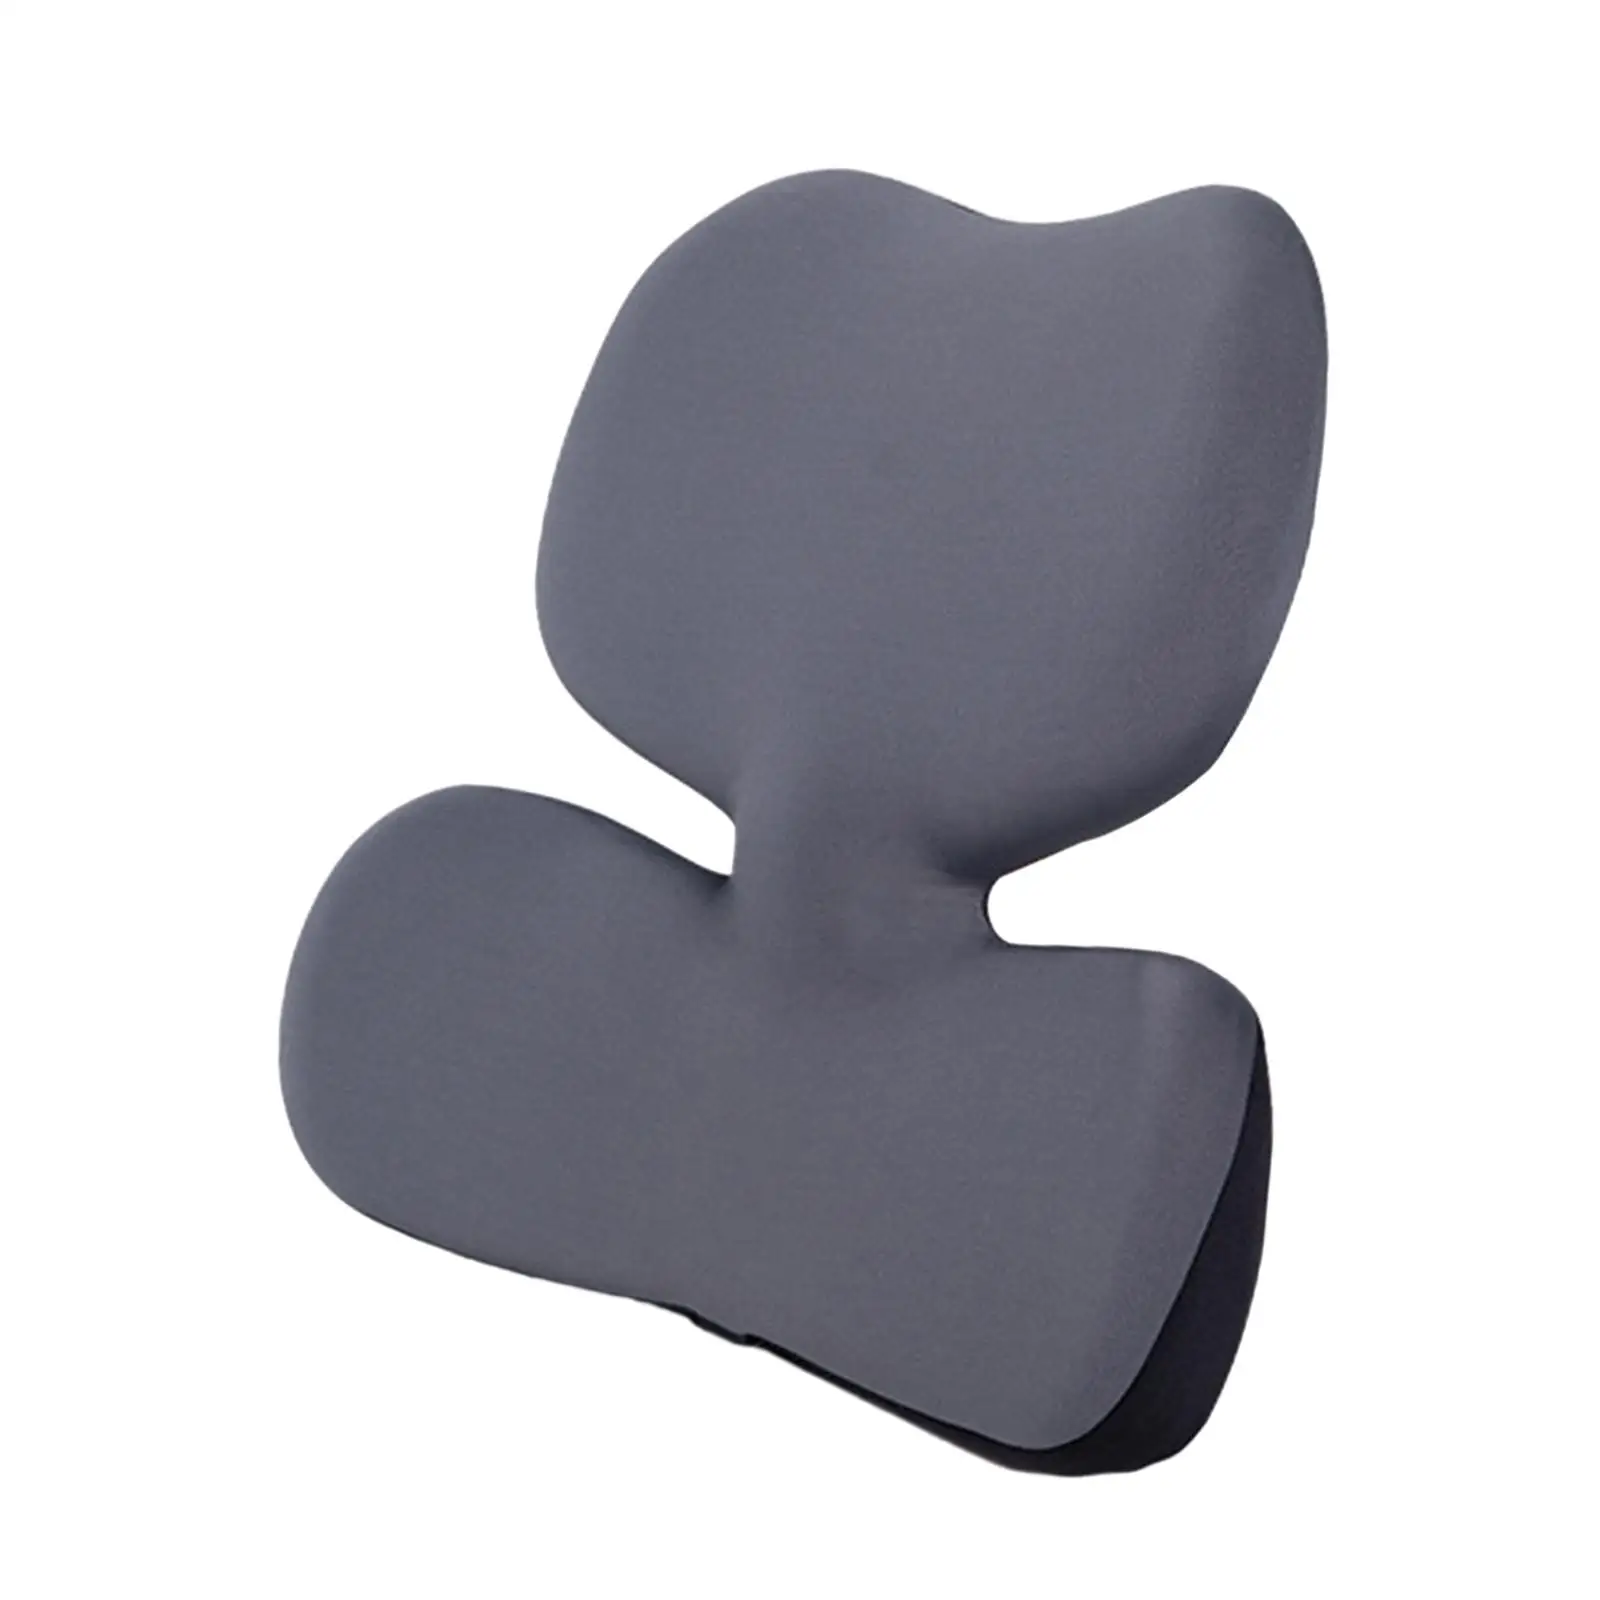 Lumbar Support Pillow Ergonomic Design Comfortable Portable Waist Support Pillow for Livingroom Car Gaming Chair Office Bedroom